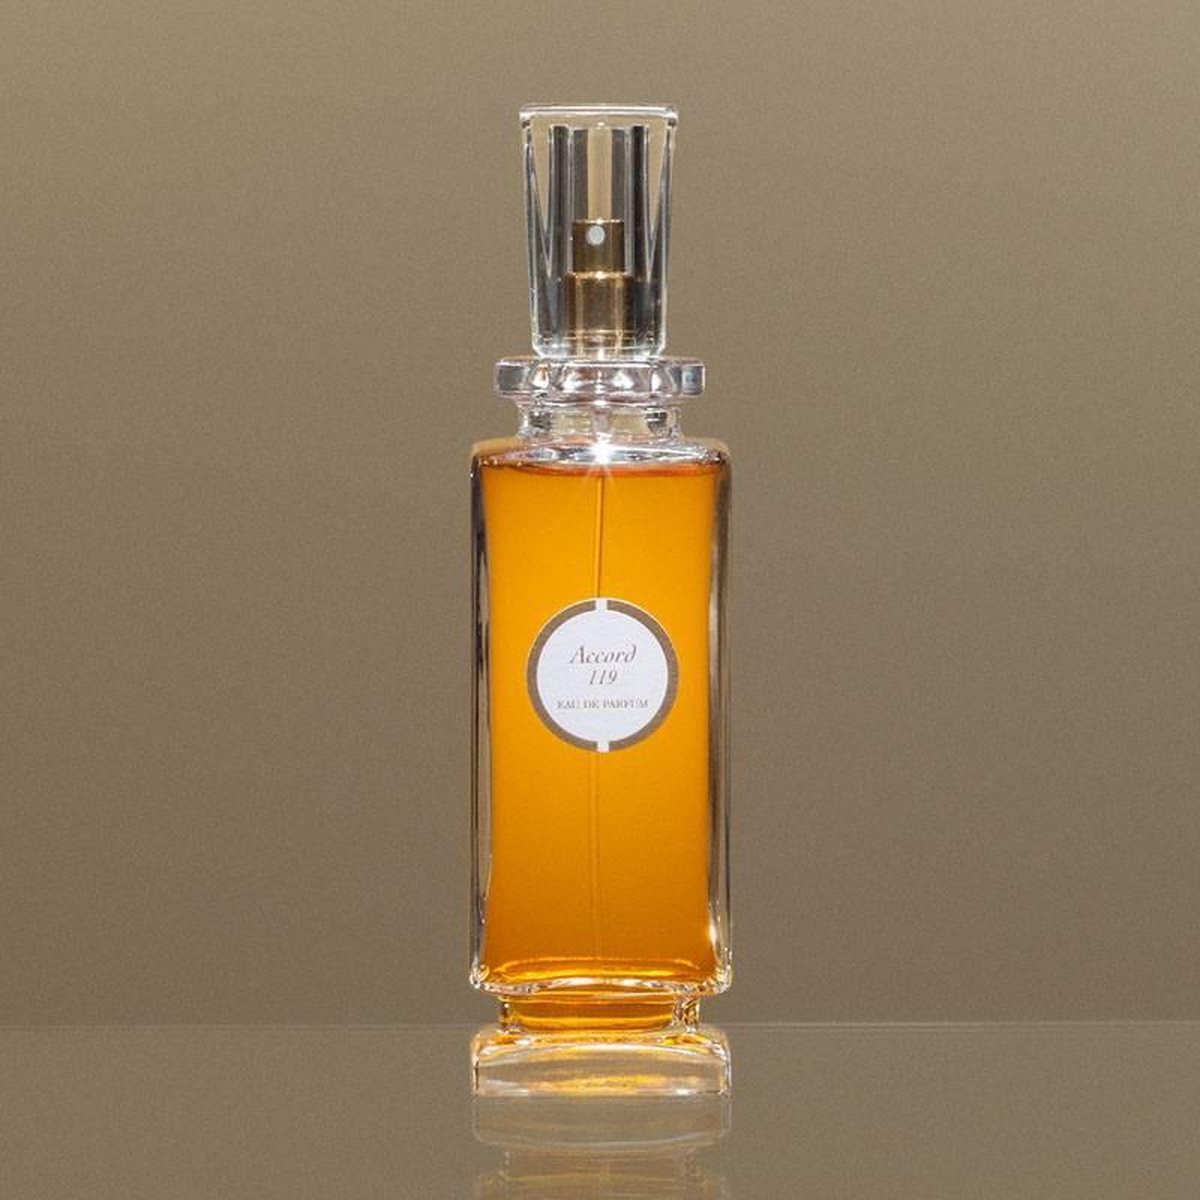 Haute Parfumerie - Accord 119